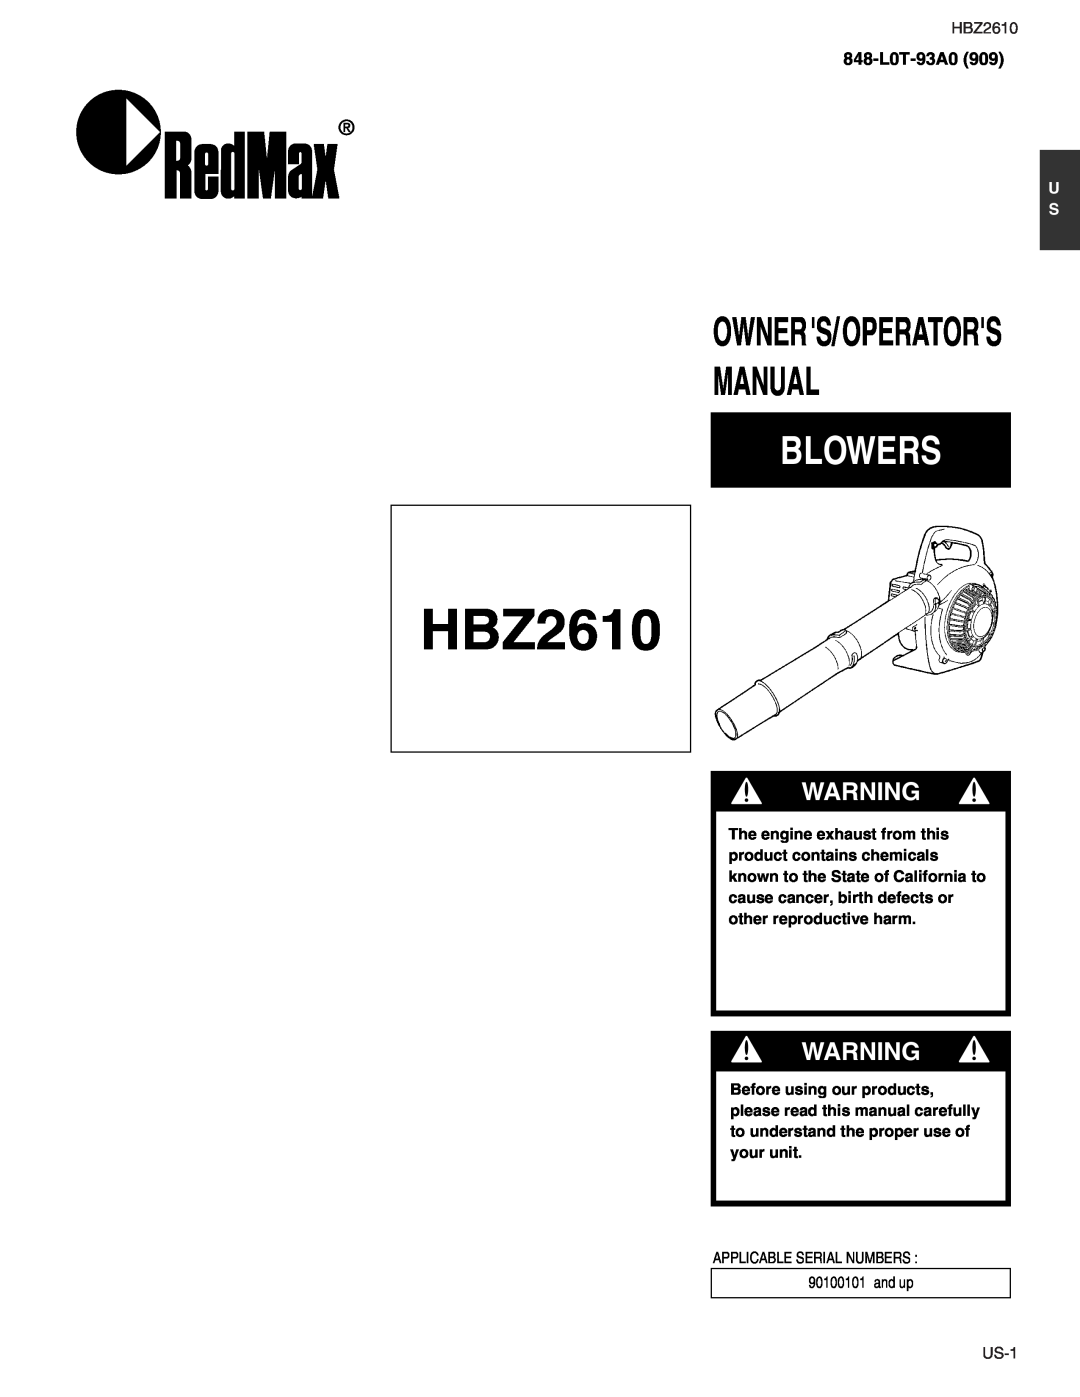 RedMax HBZ2610 manual 848-L0T-93A0909, Manual, Blowers, Owners/Operators 